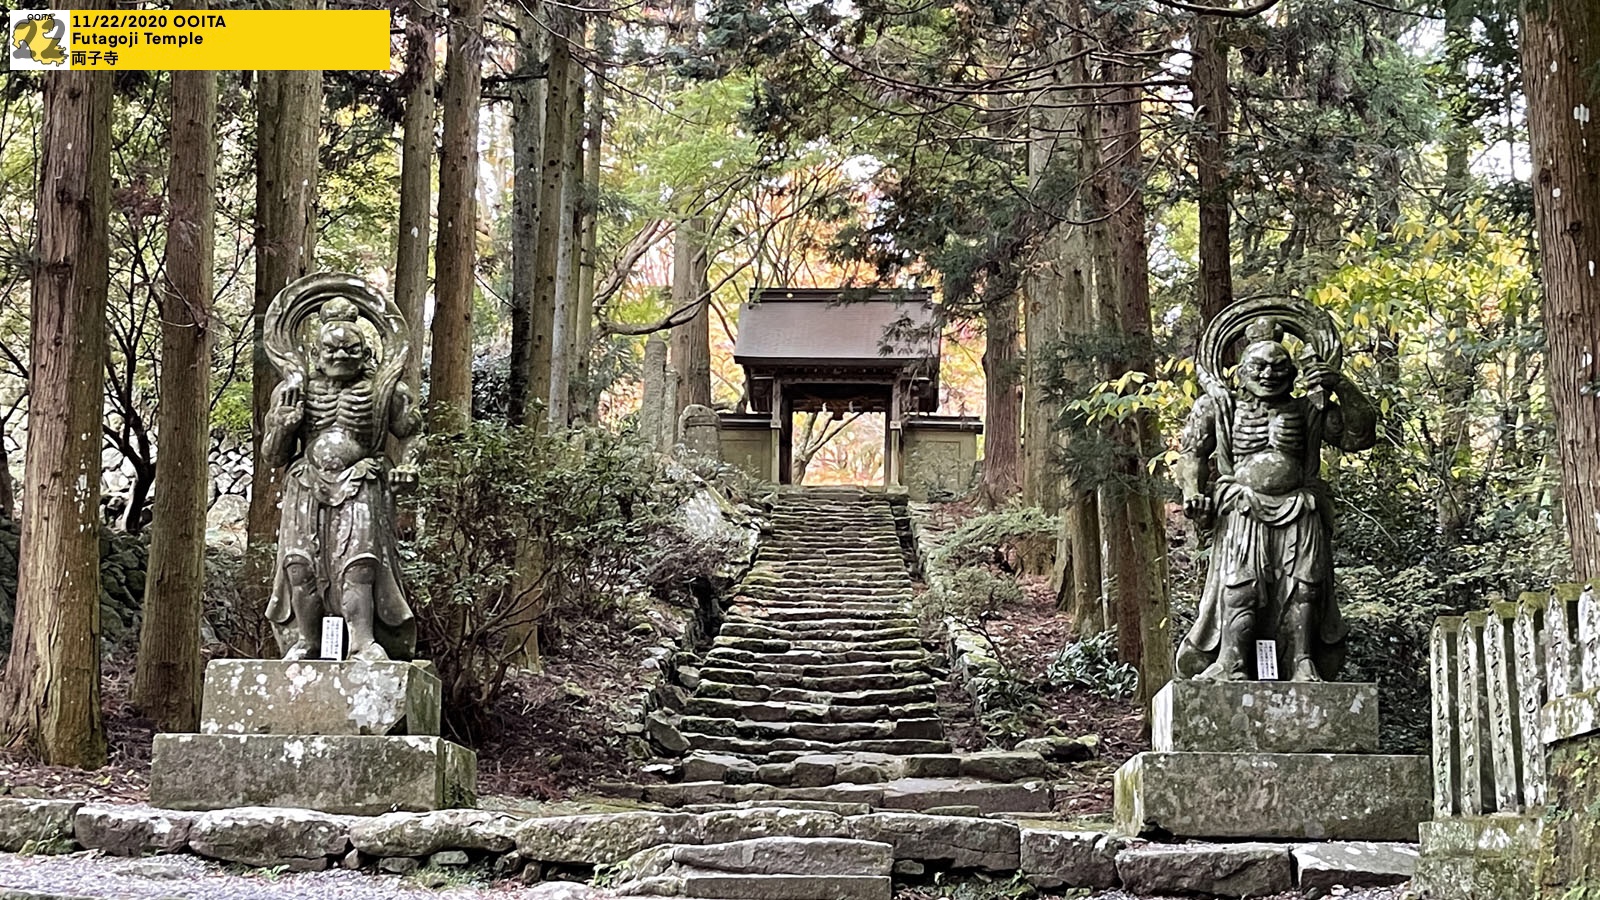 Futagoji Temple